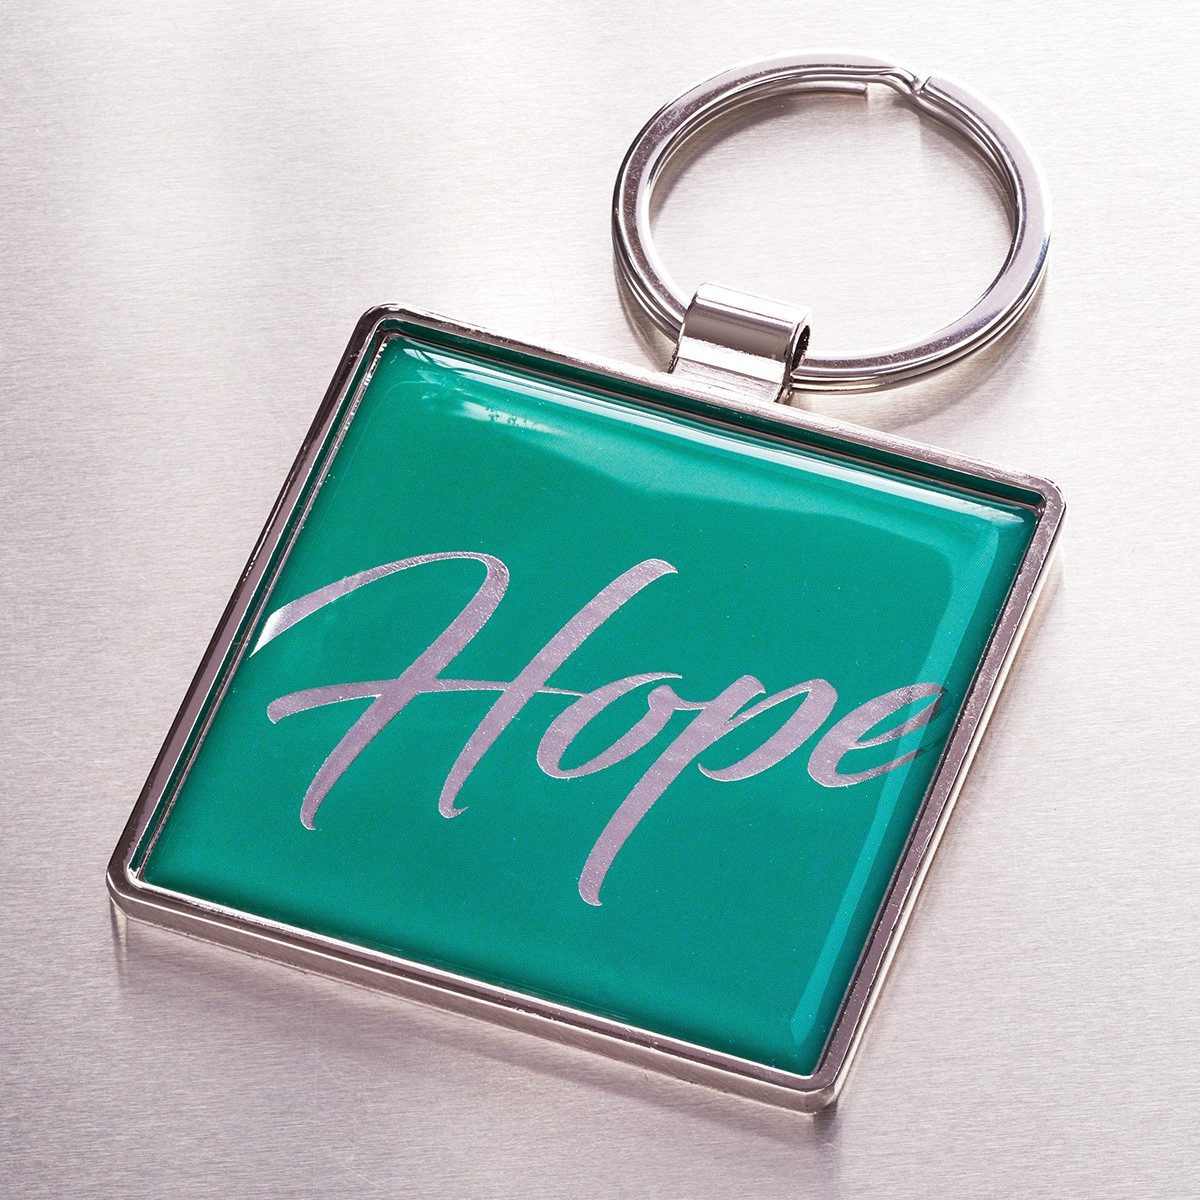 Hope - Psalm 146:5 Key Ring